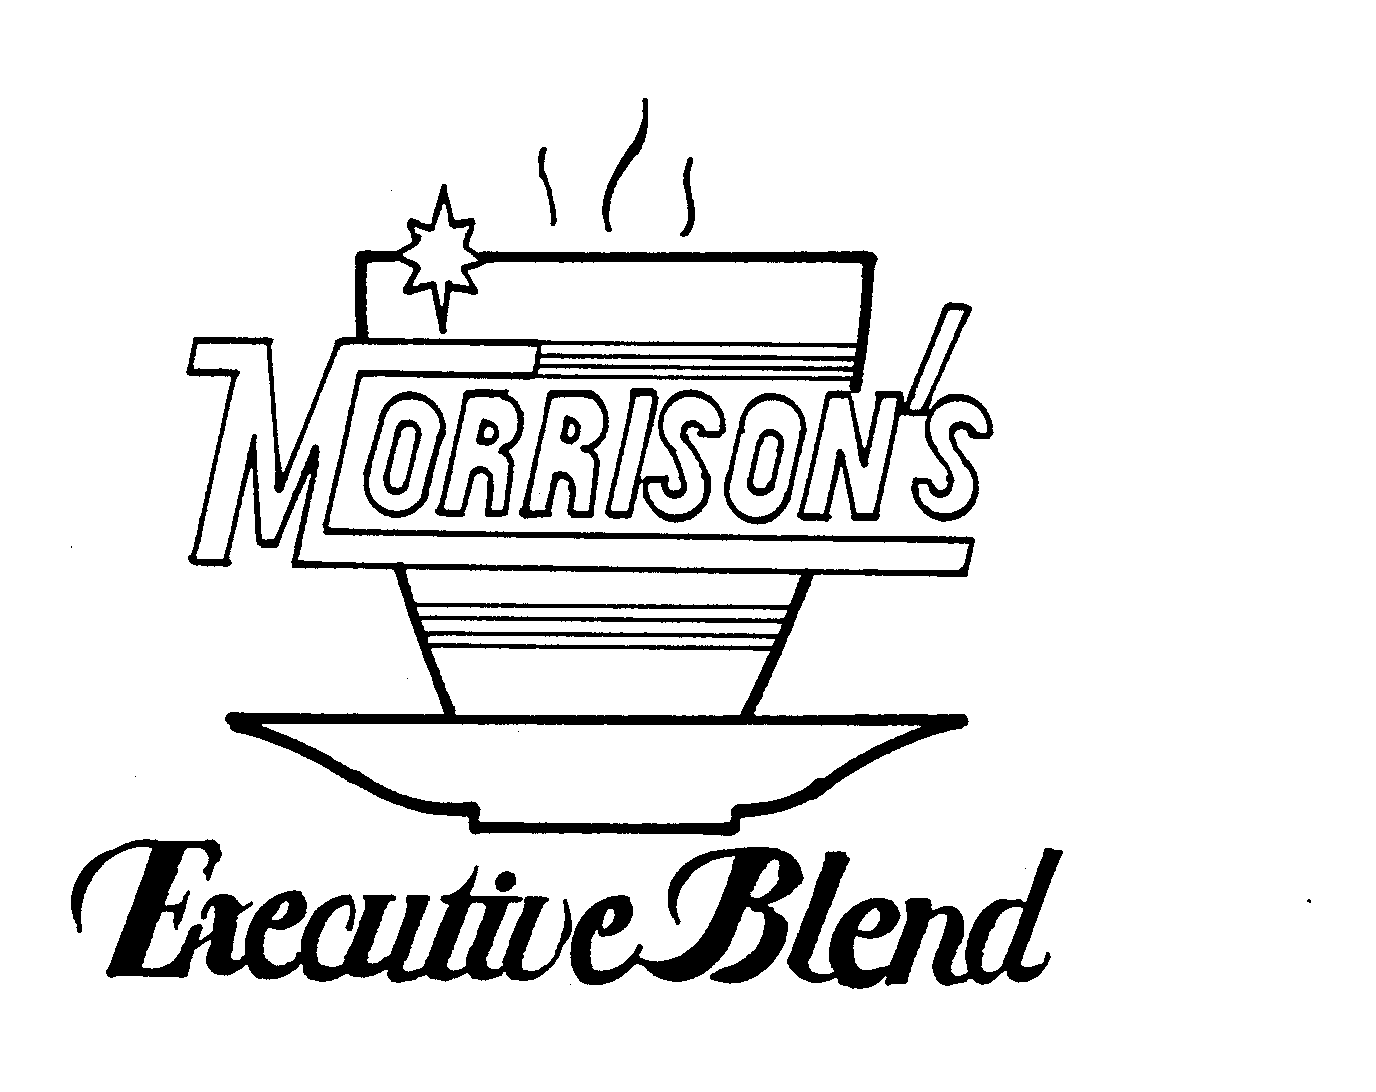  MORRISON'S EXECUTIVE BLEND